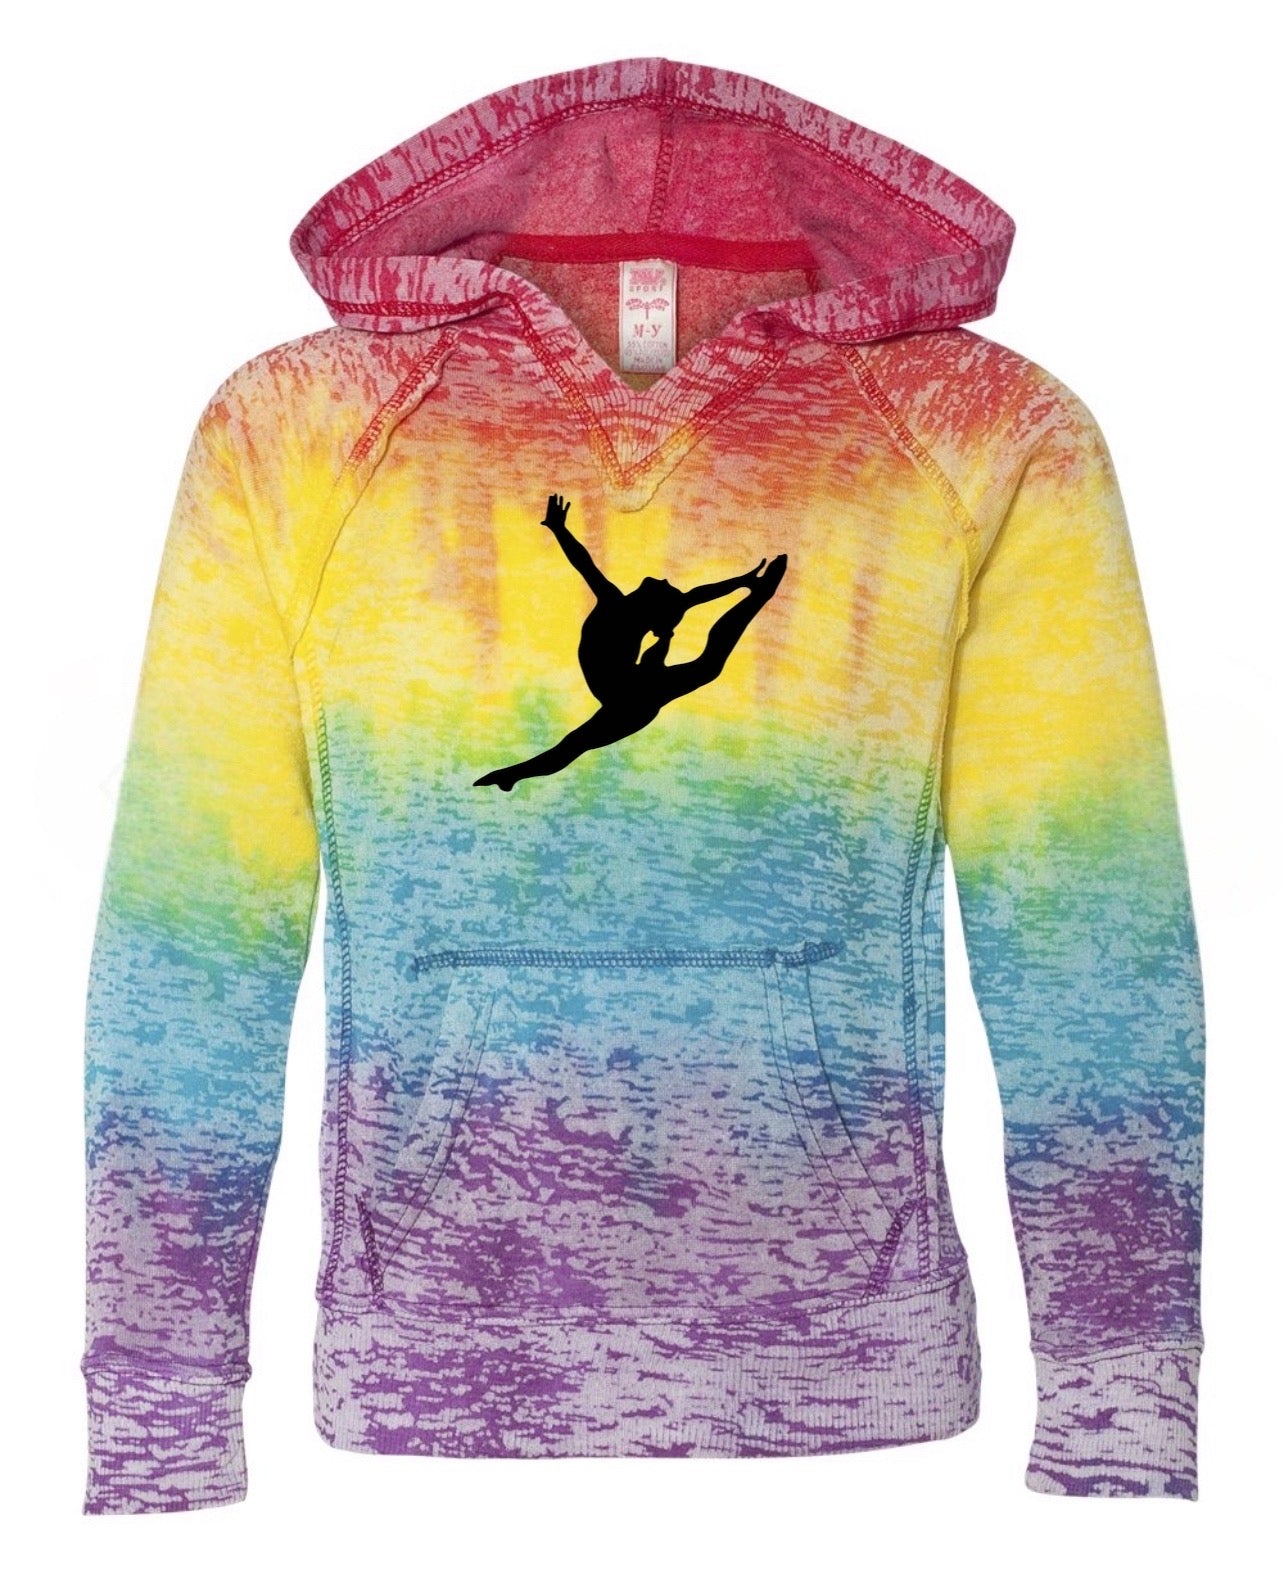 Gymnast sweatshirt| Custom Gym Sweatshirt| Gymnastics Hoodie